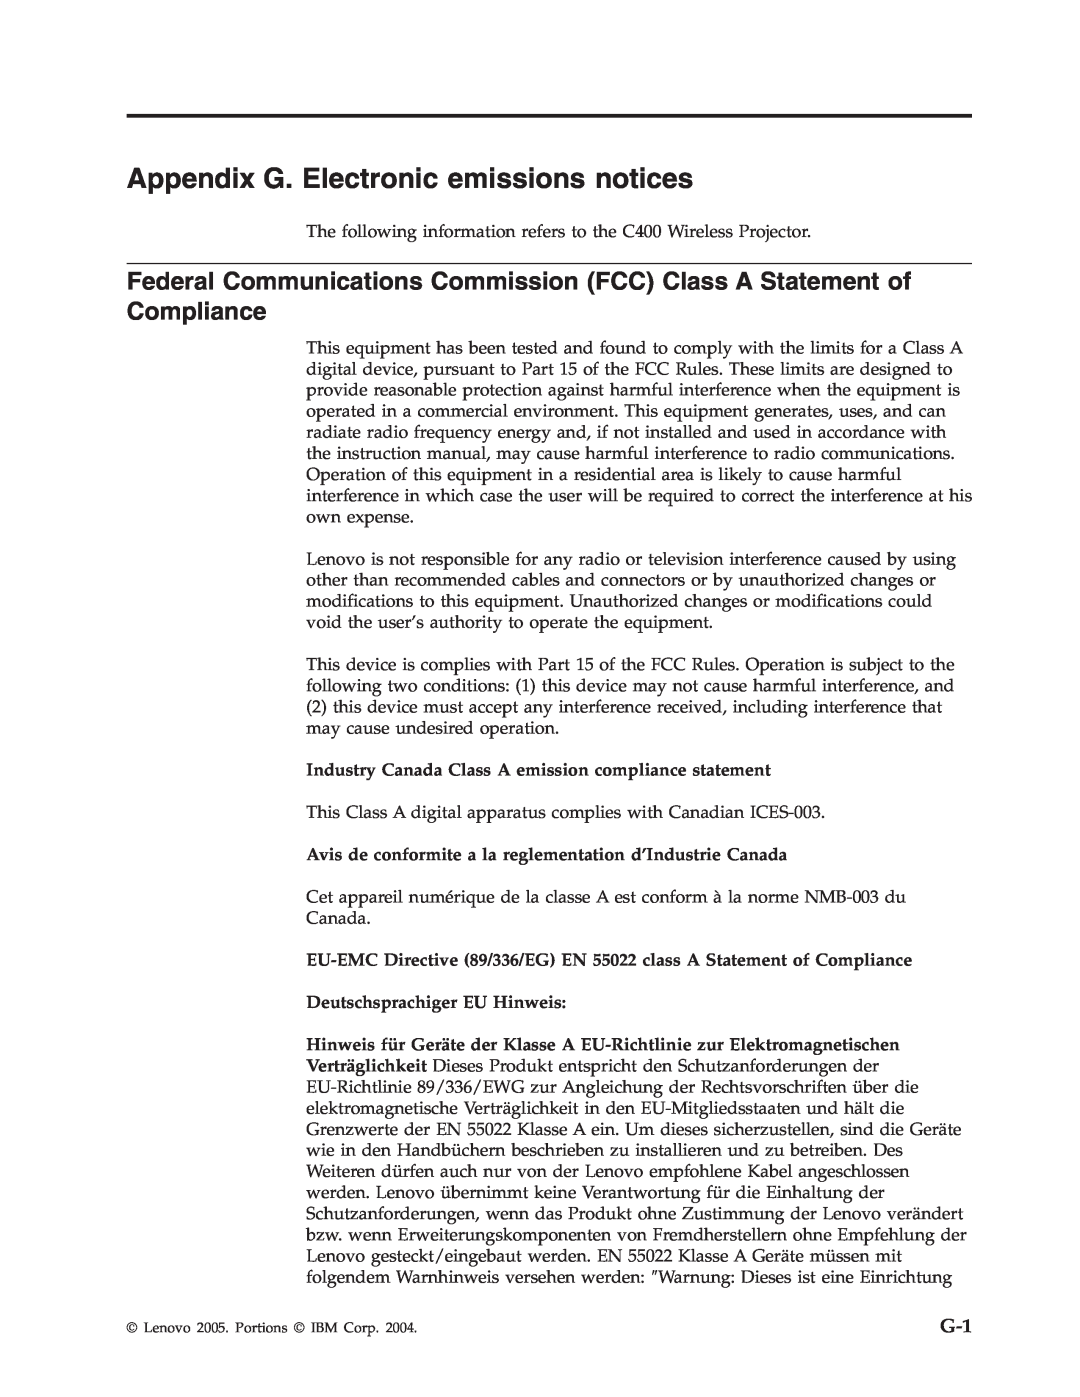 Lenovo C400 manual Appendix G. Electronic emissions notices, Deutschsprachiger EU Hinweis 